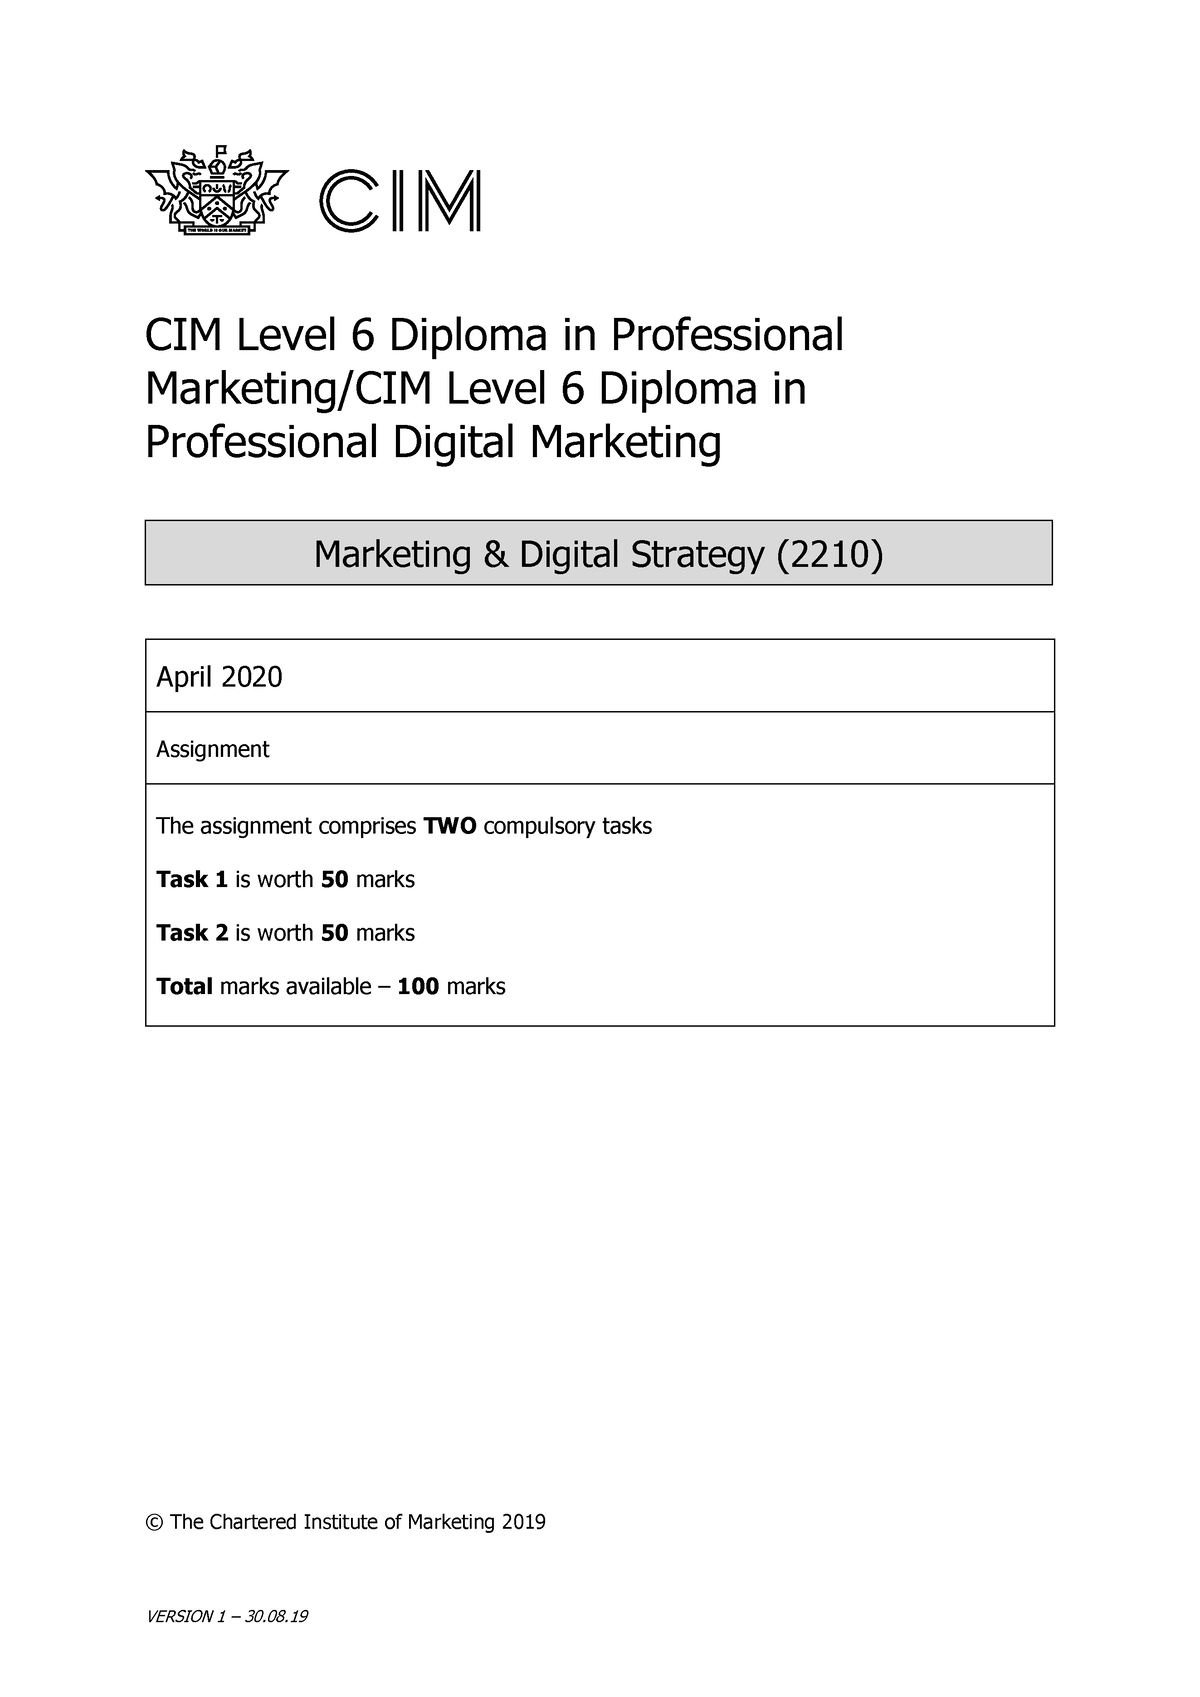 cim digital marketing techniques assignment example